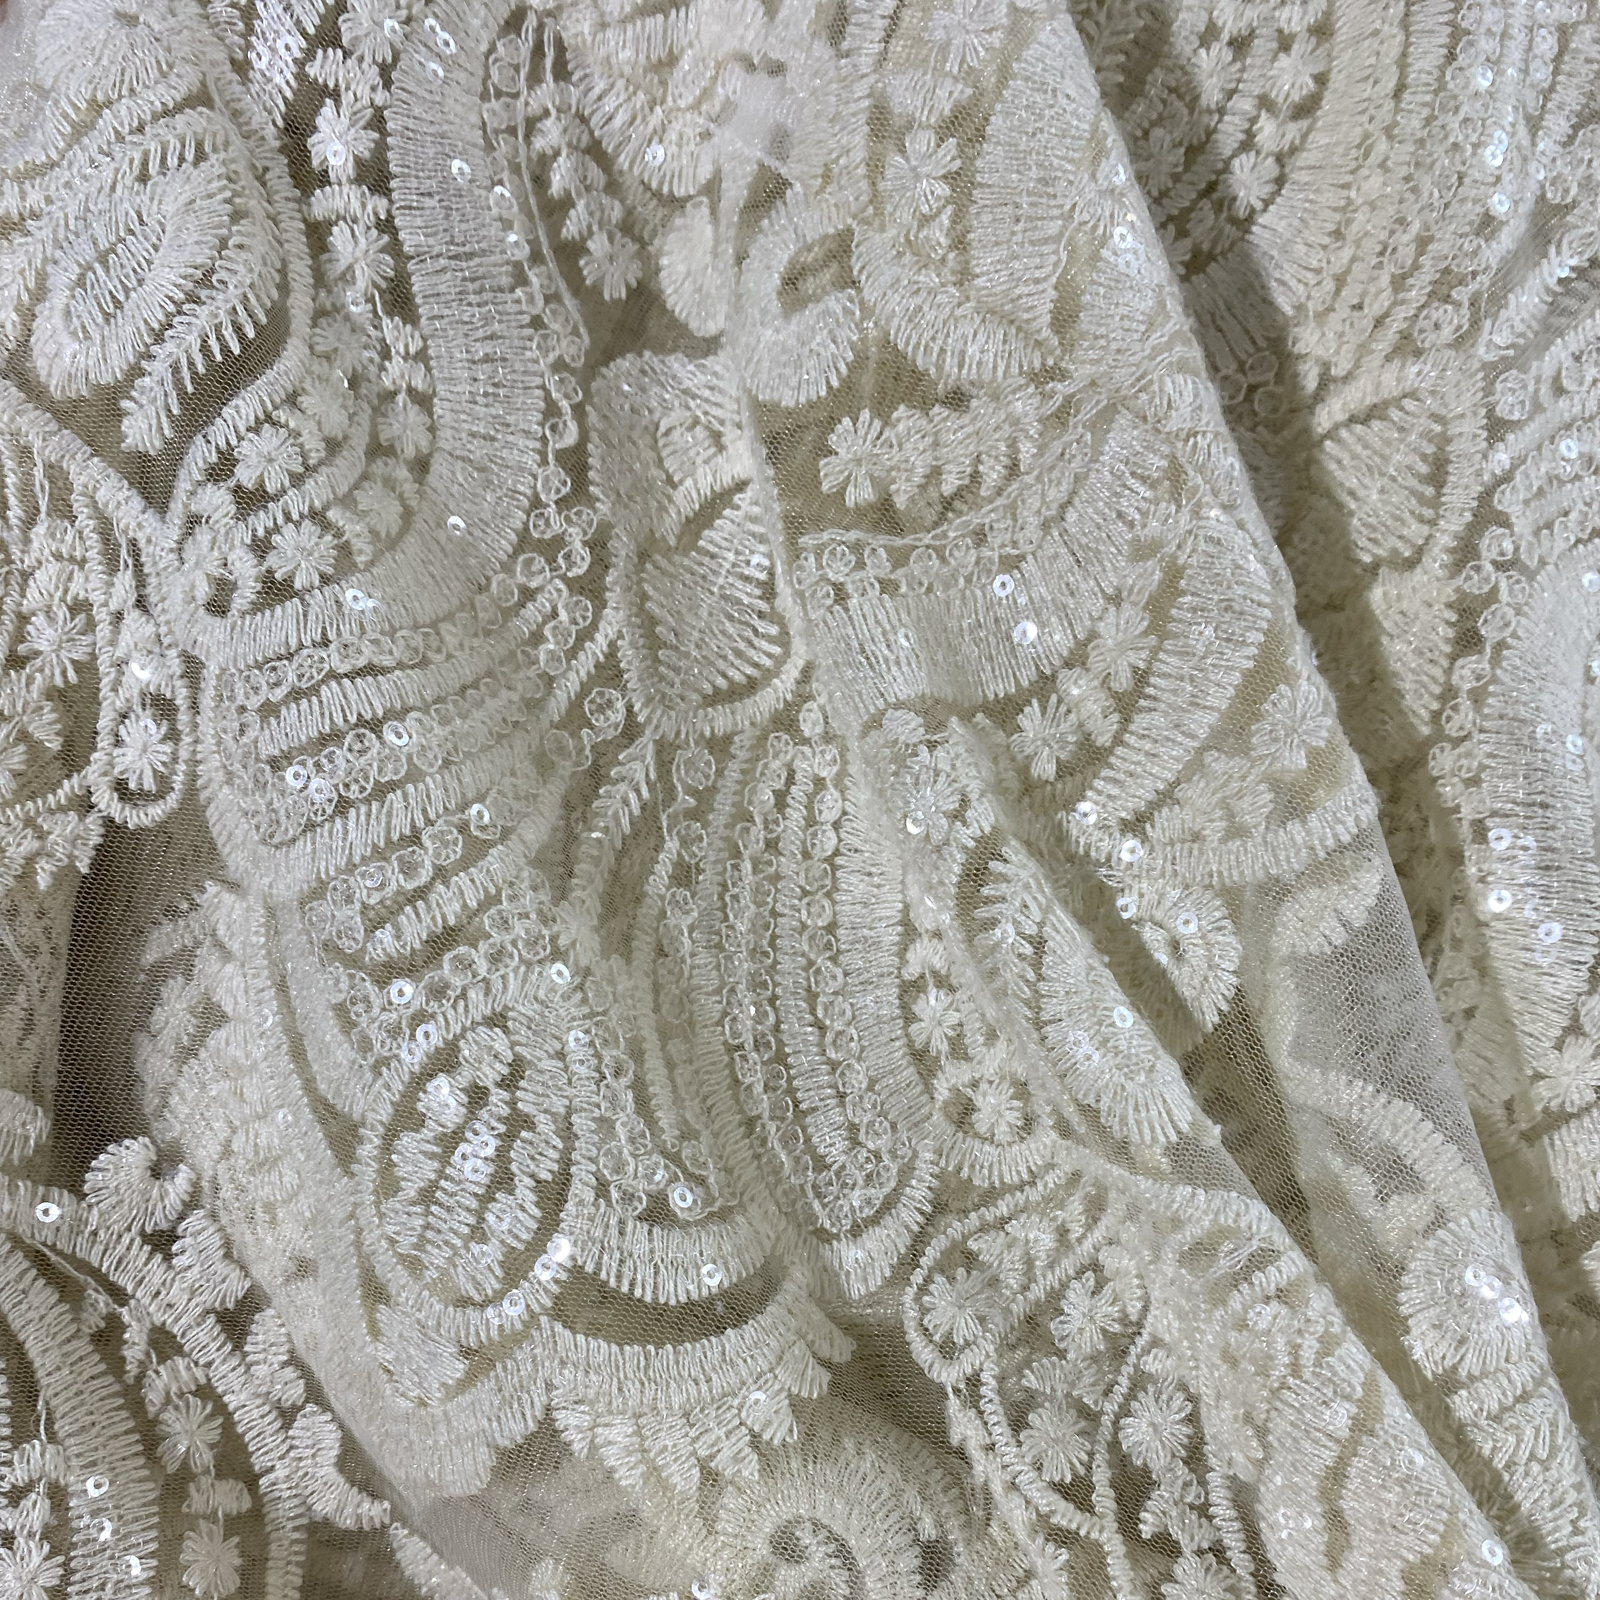 Ivory princess lace overlay